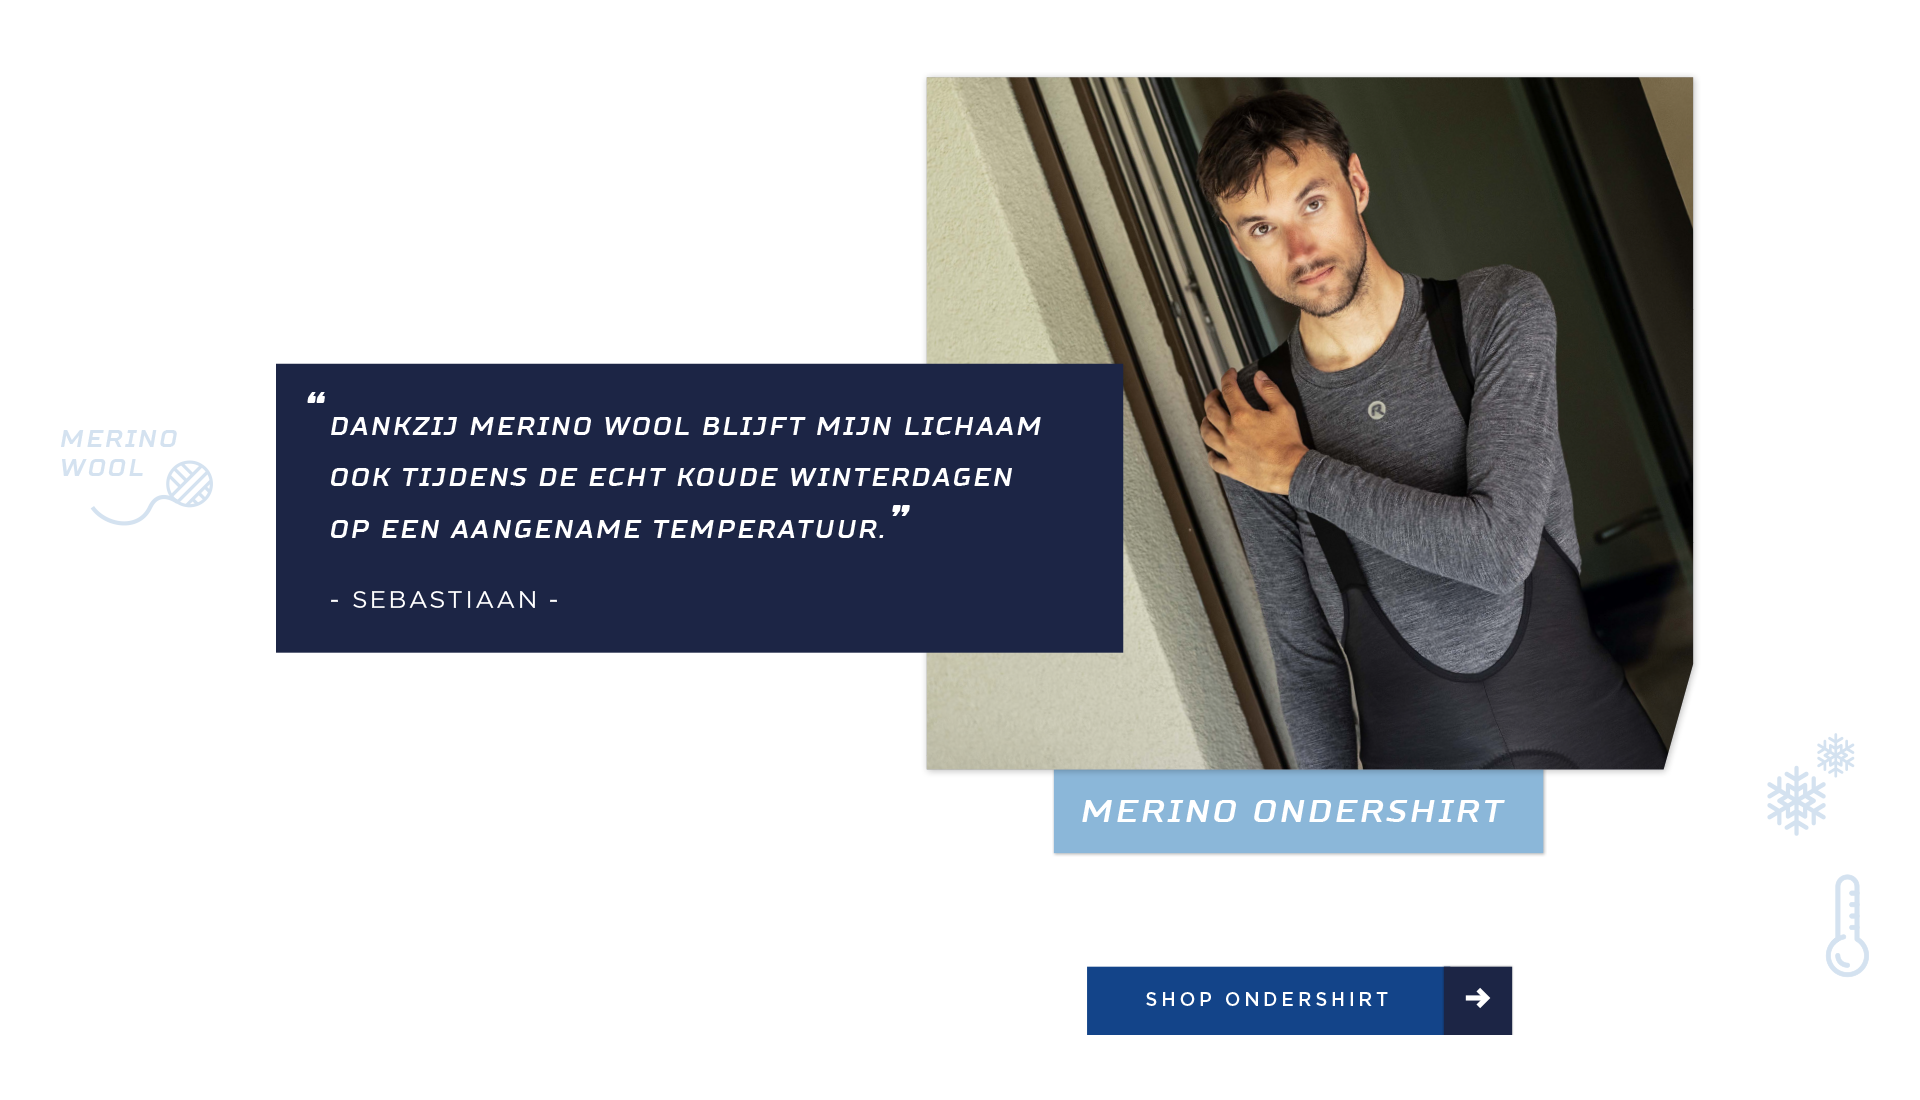 Wielrenner poserend in het merino ondershirt van Rogelli, gemaakt van merino wol, met toegevoegd quote over kwaliteit